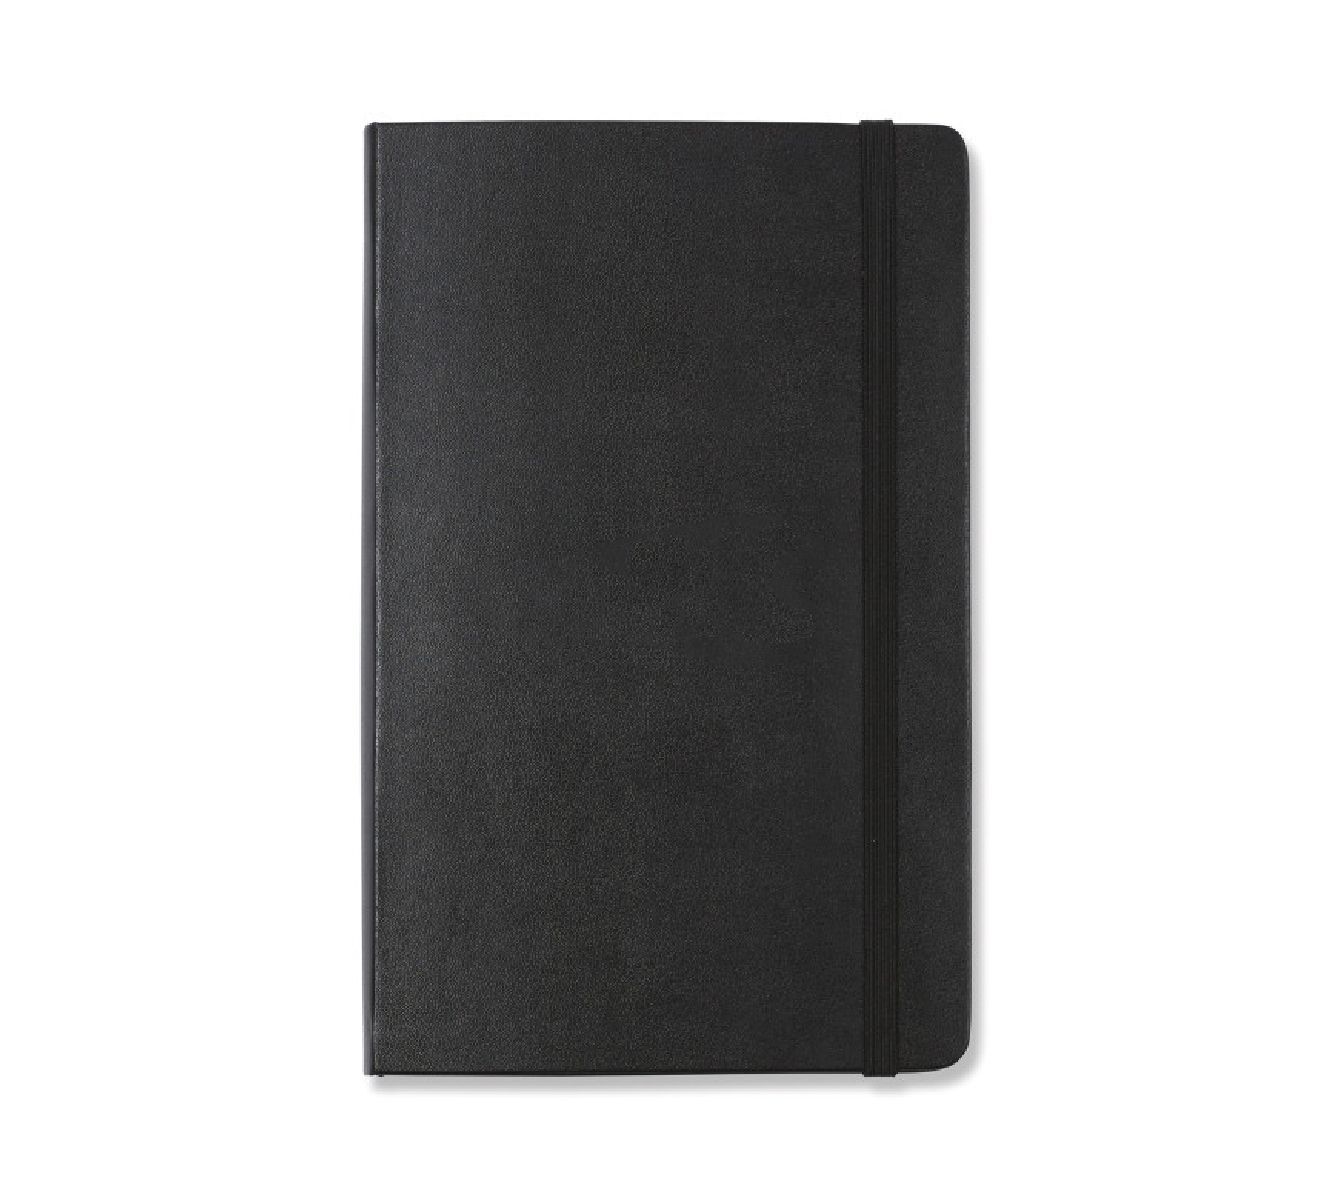 Moleskine Hard Cover Ruled Large Notebook